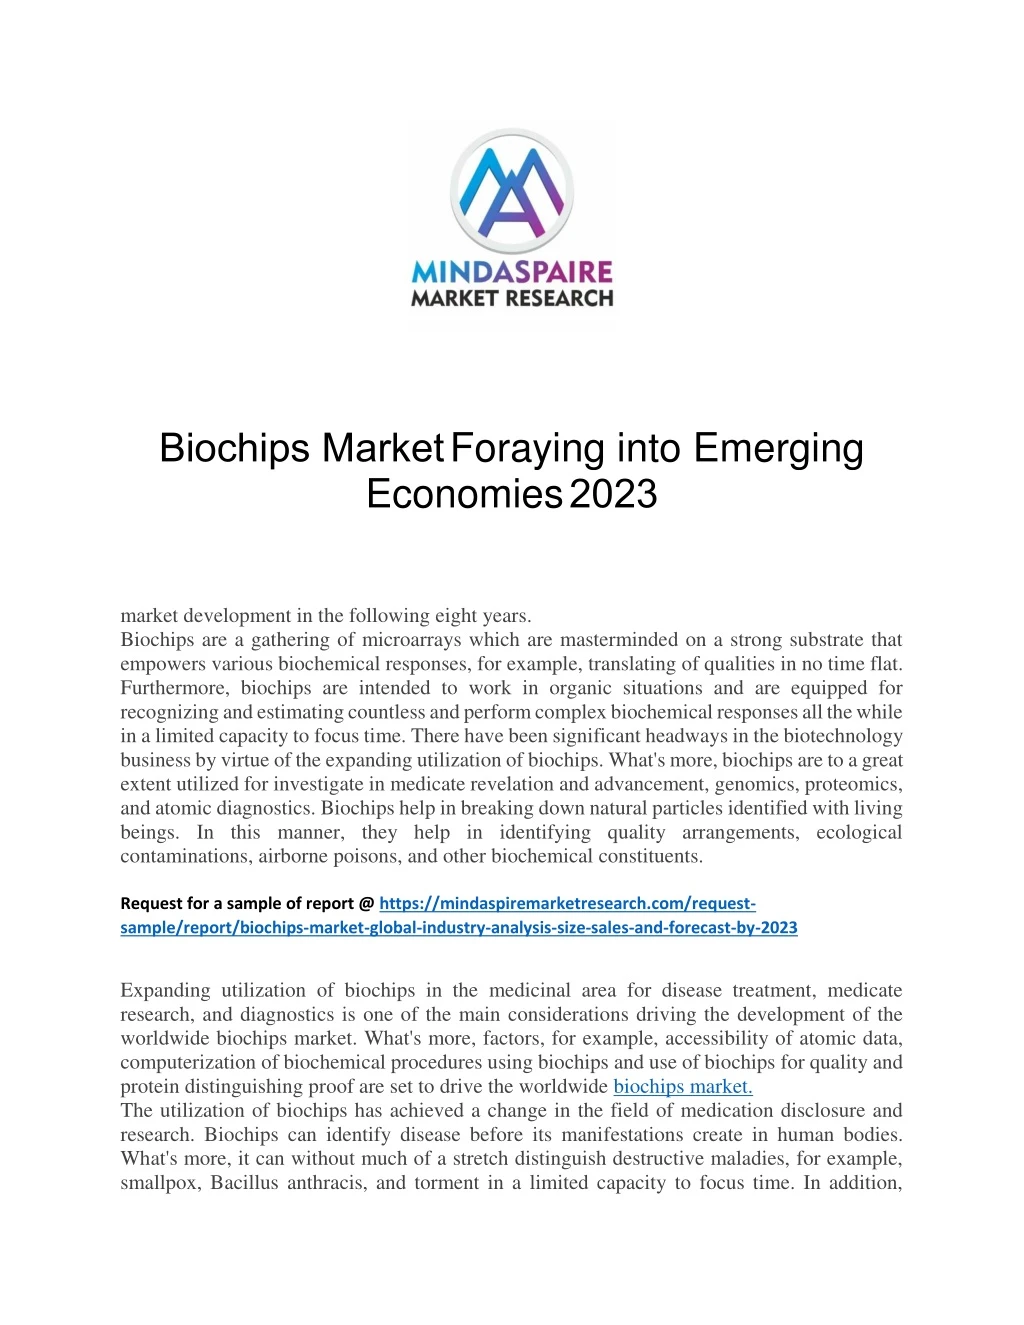 biochips market foraying into emerging economies